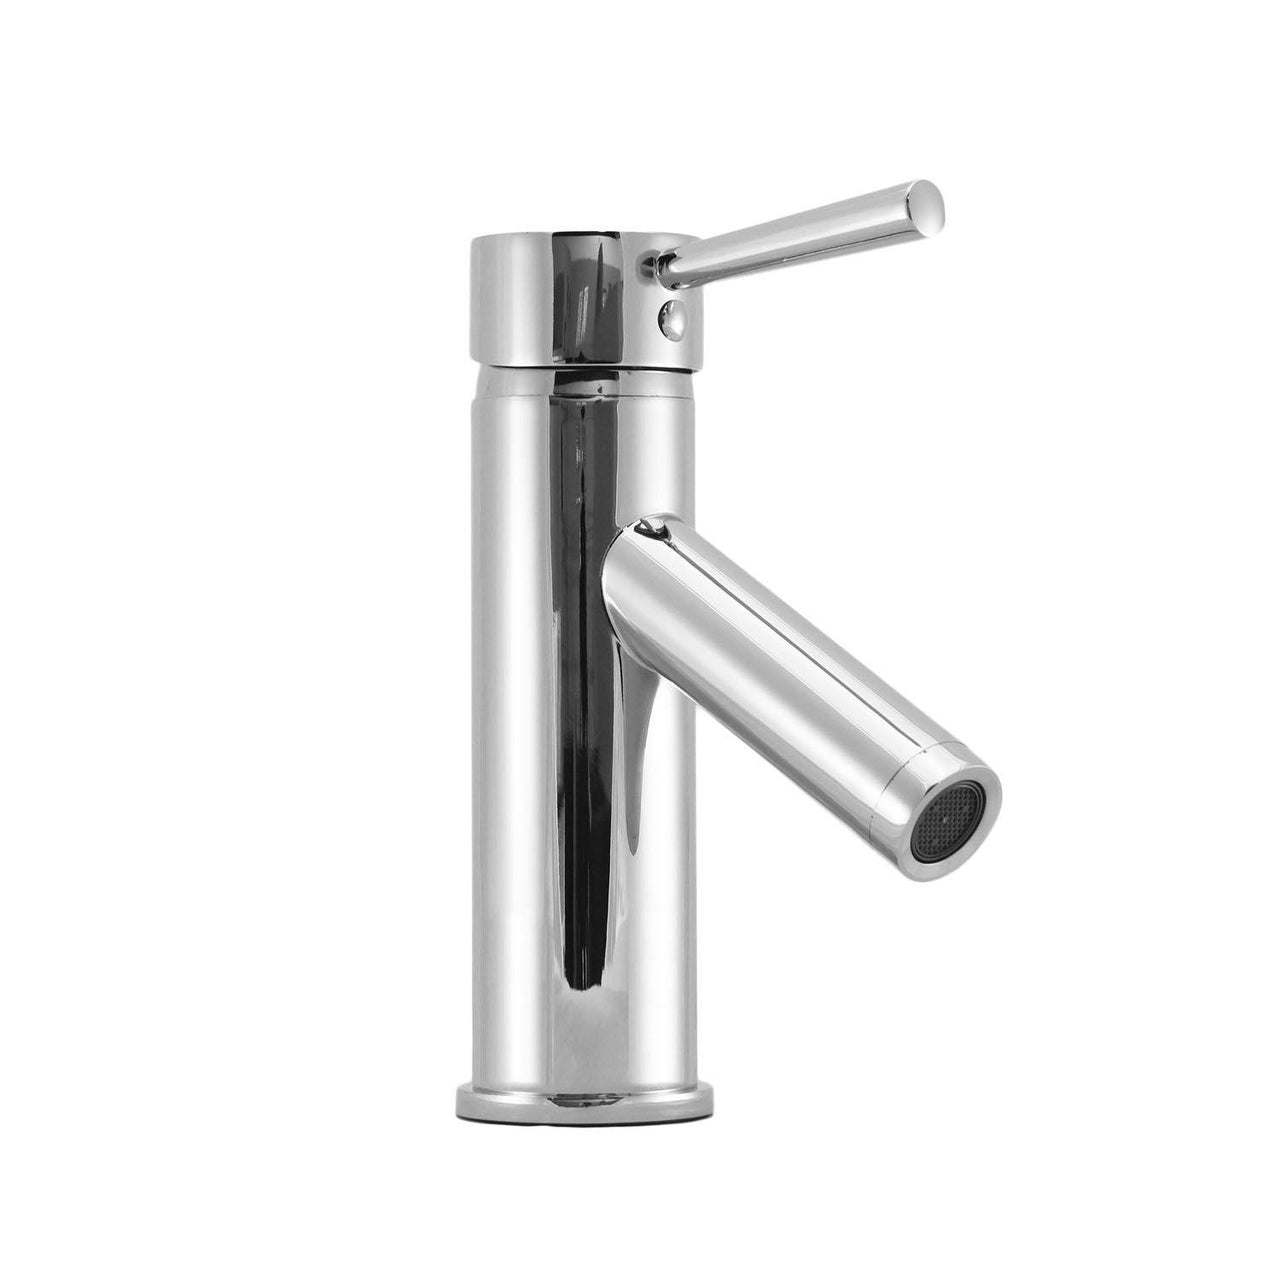 Virtu USA Midori 36" Single Square Sink Grey Top Vanity in Grey with Polished Chrome Faucet and Mirror Vanity Virtu USA 